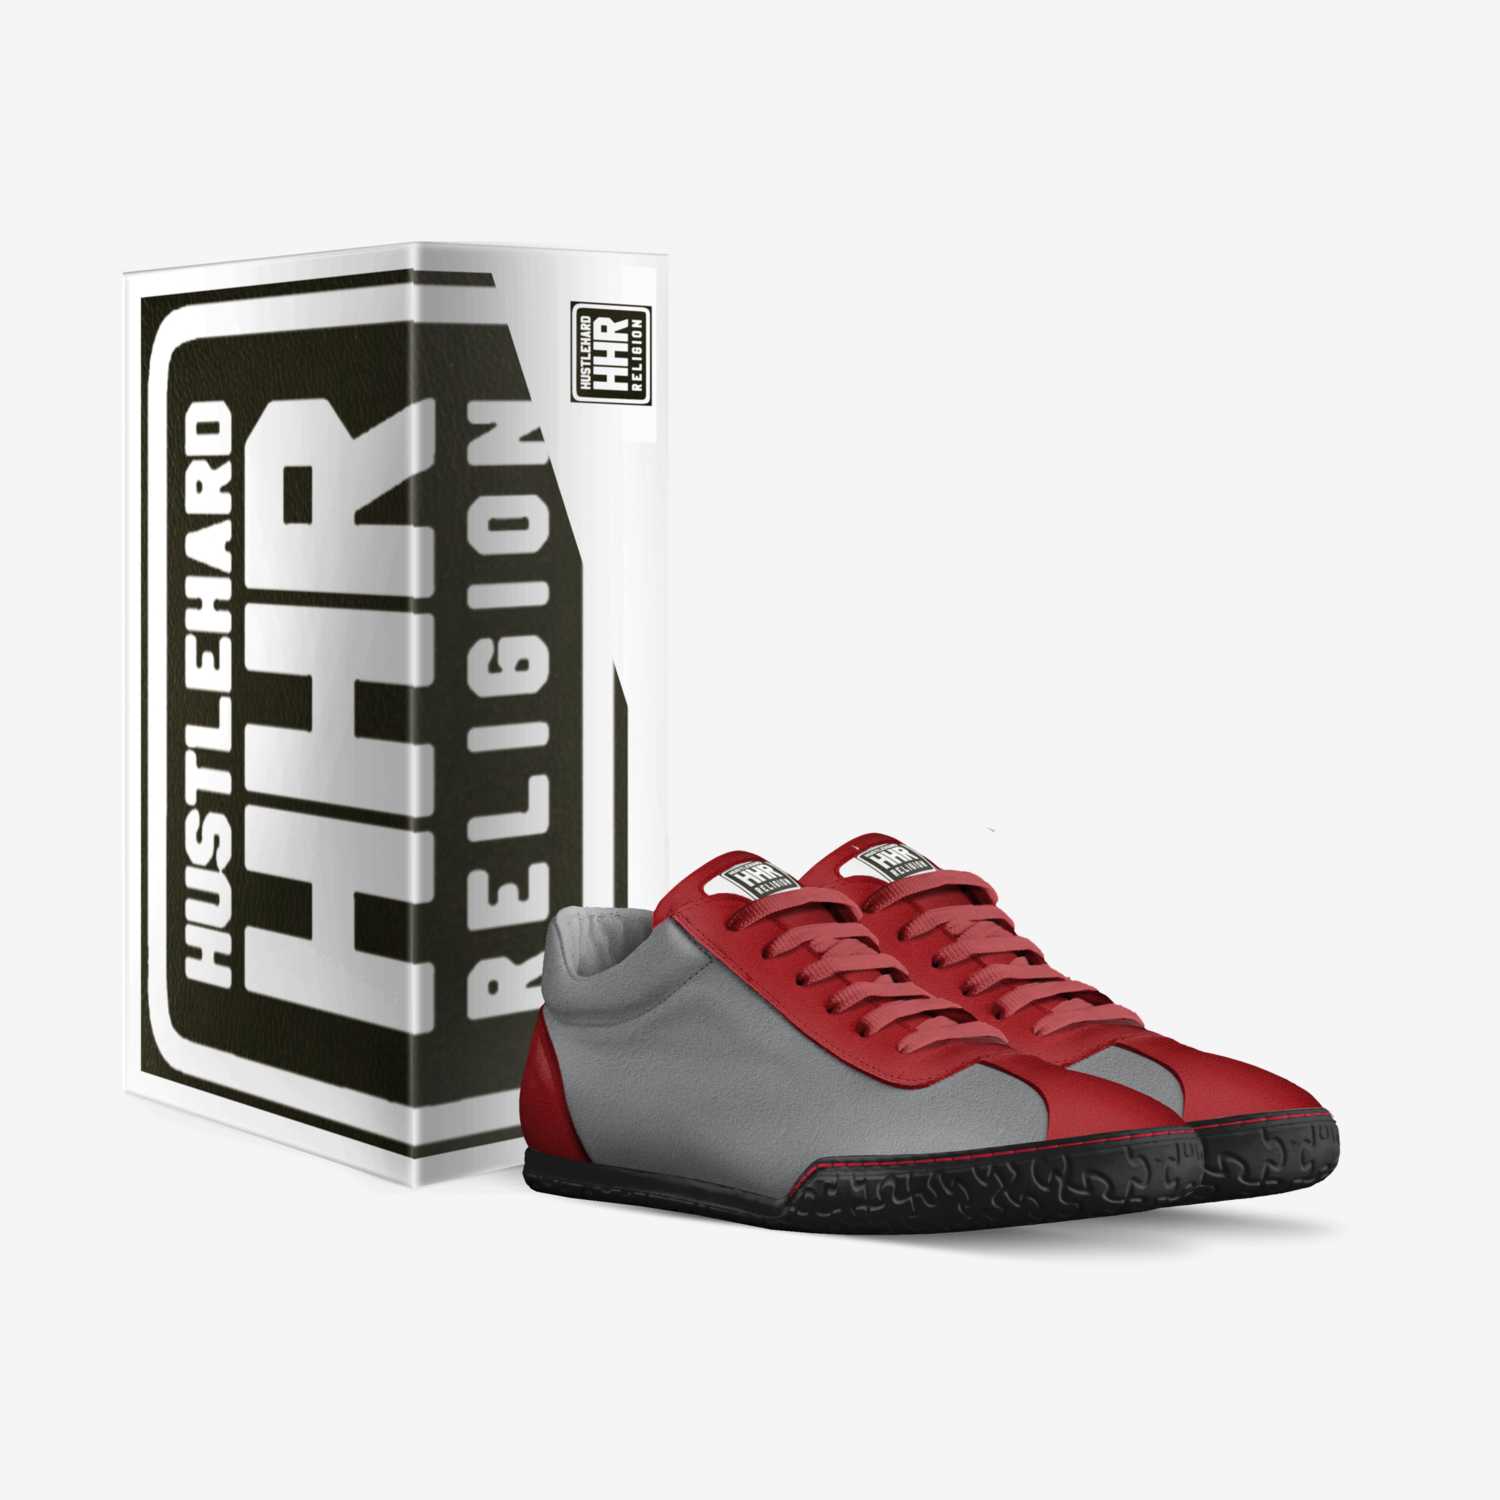 HustleHardReligion custom made in Italy shoes by Capn Kirk | Box view